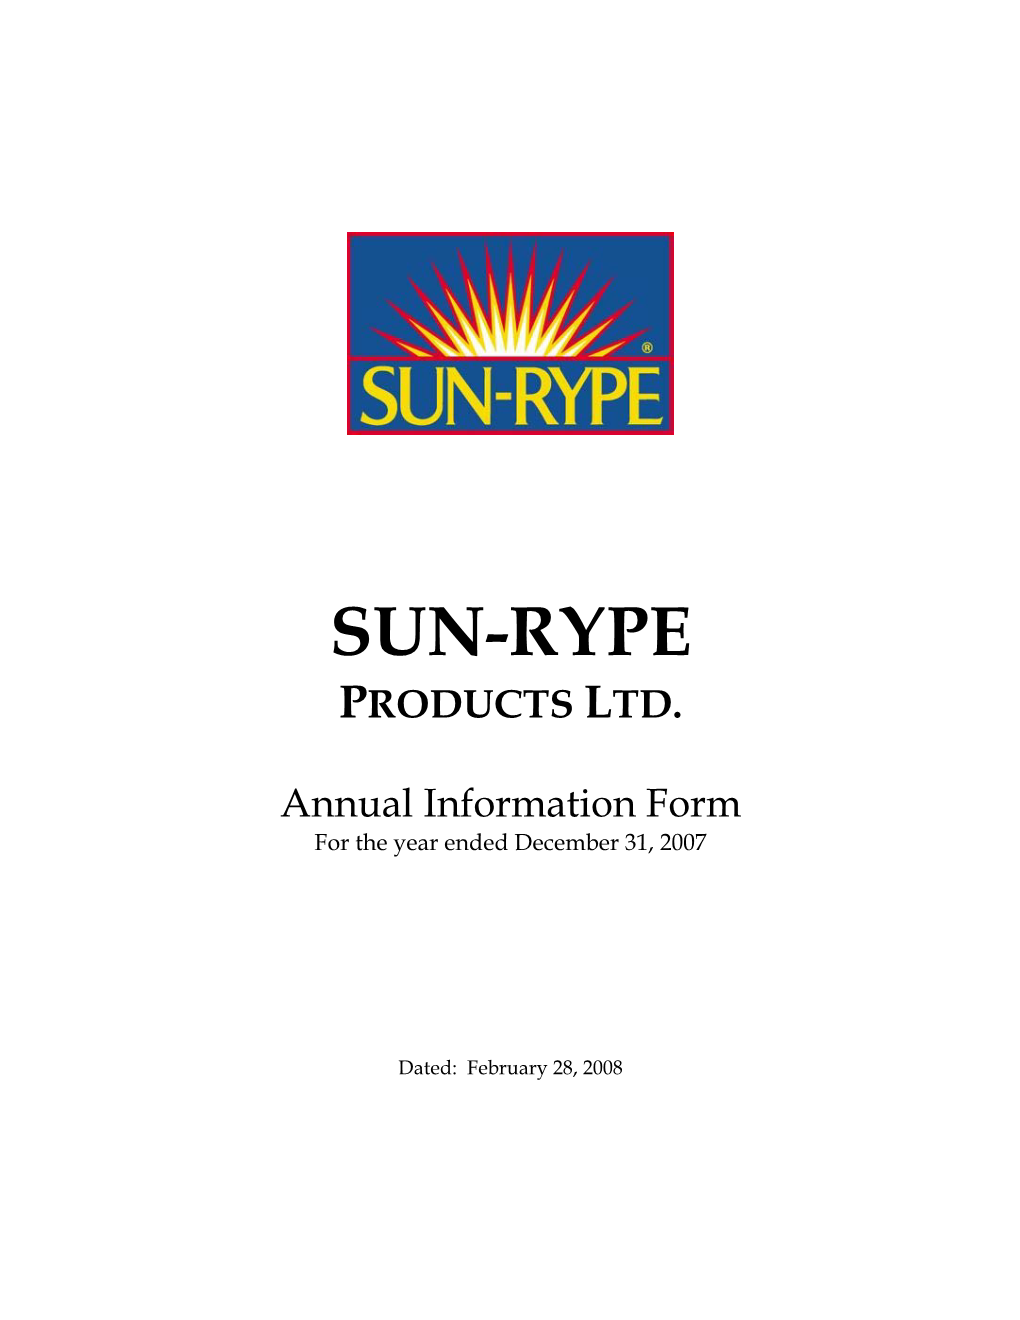 Sun-Rype Products Ltd